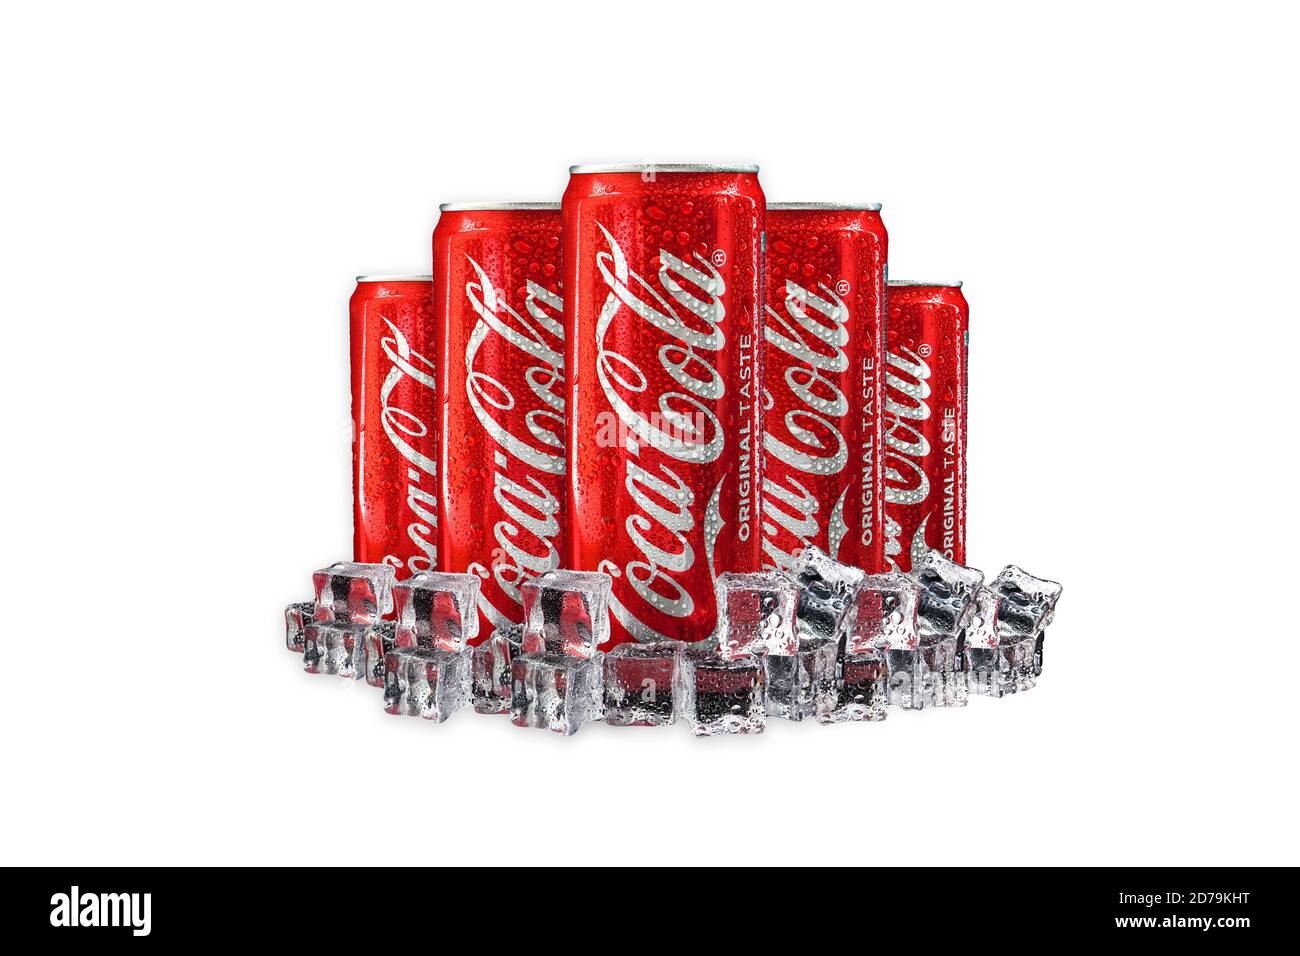 https://c8.alamy.com/comp/2D79KHT/kuala-lumpur-malaysia-october-19-2020-coca-cola-or-coke-drink-on-white-background-2D79KHT.jpg